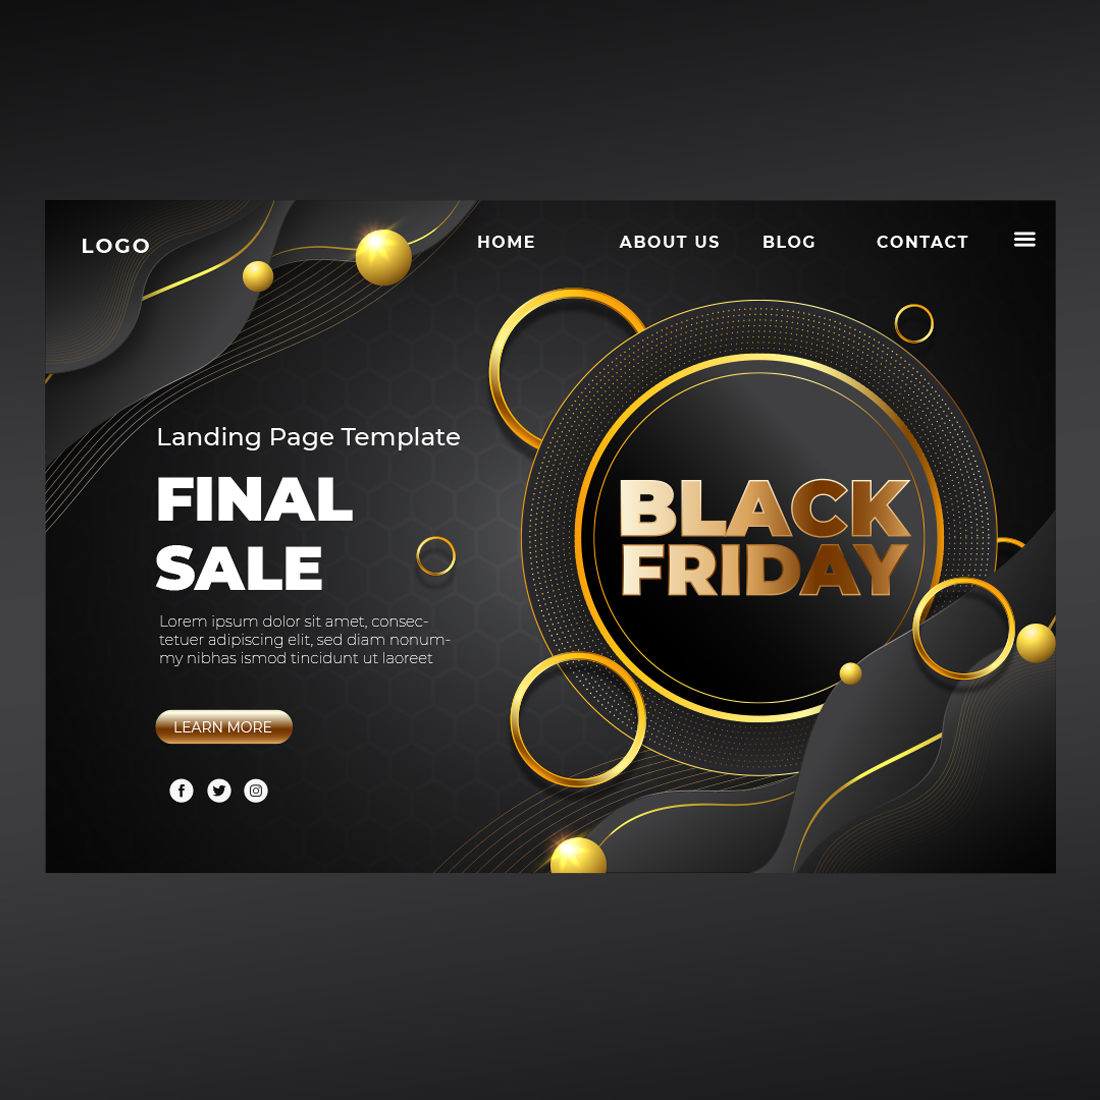 Premium Black Friday Templates preview image.